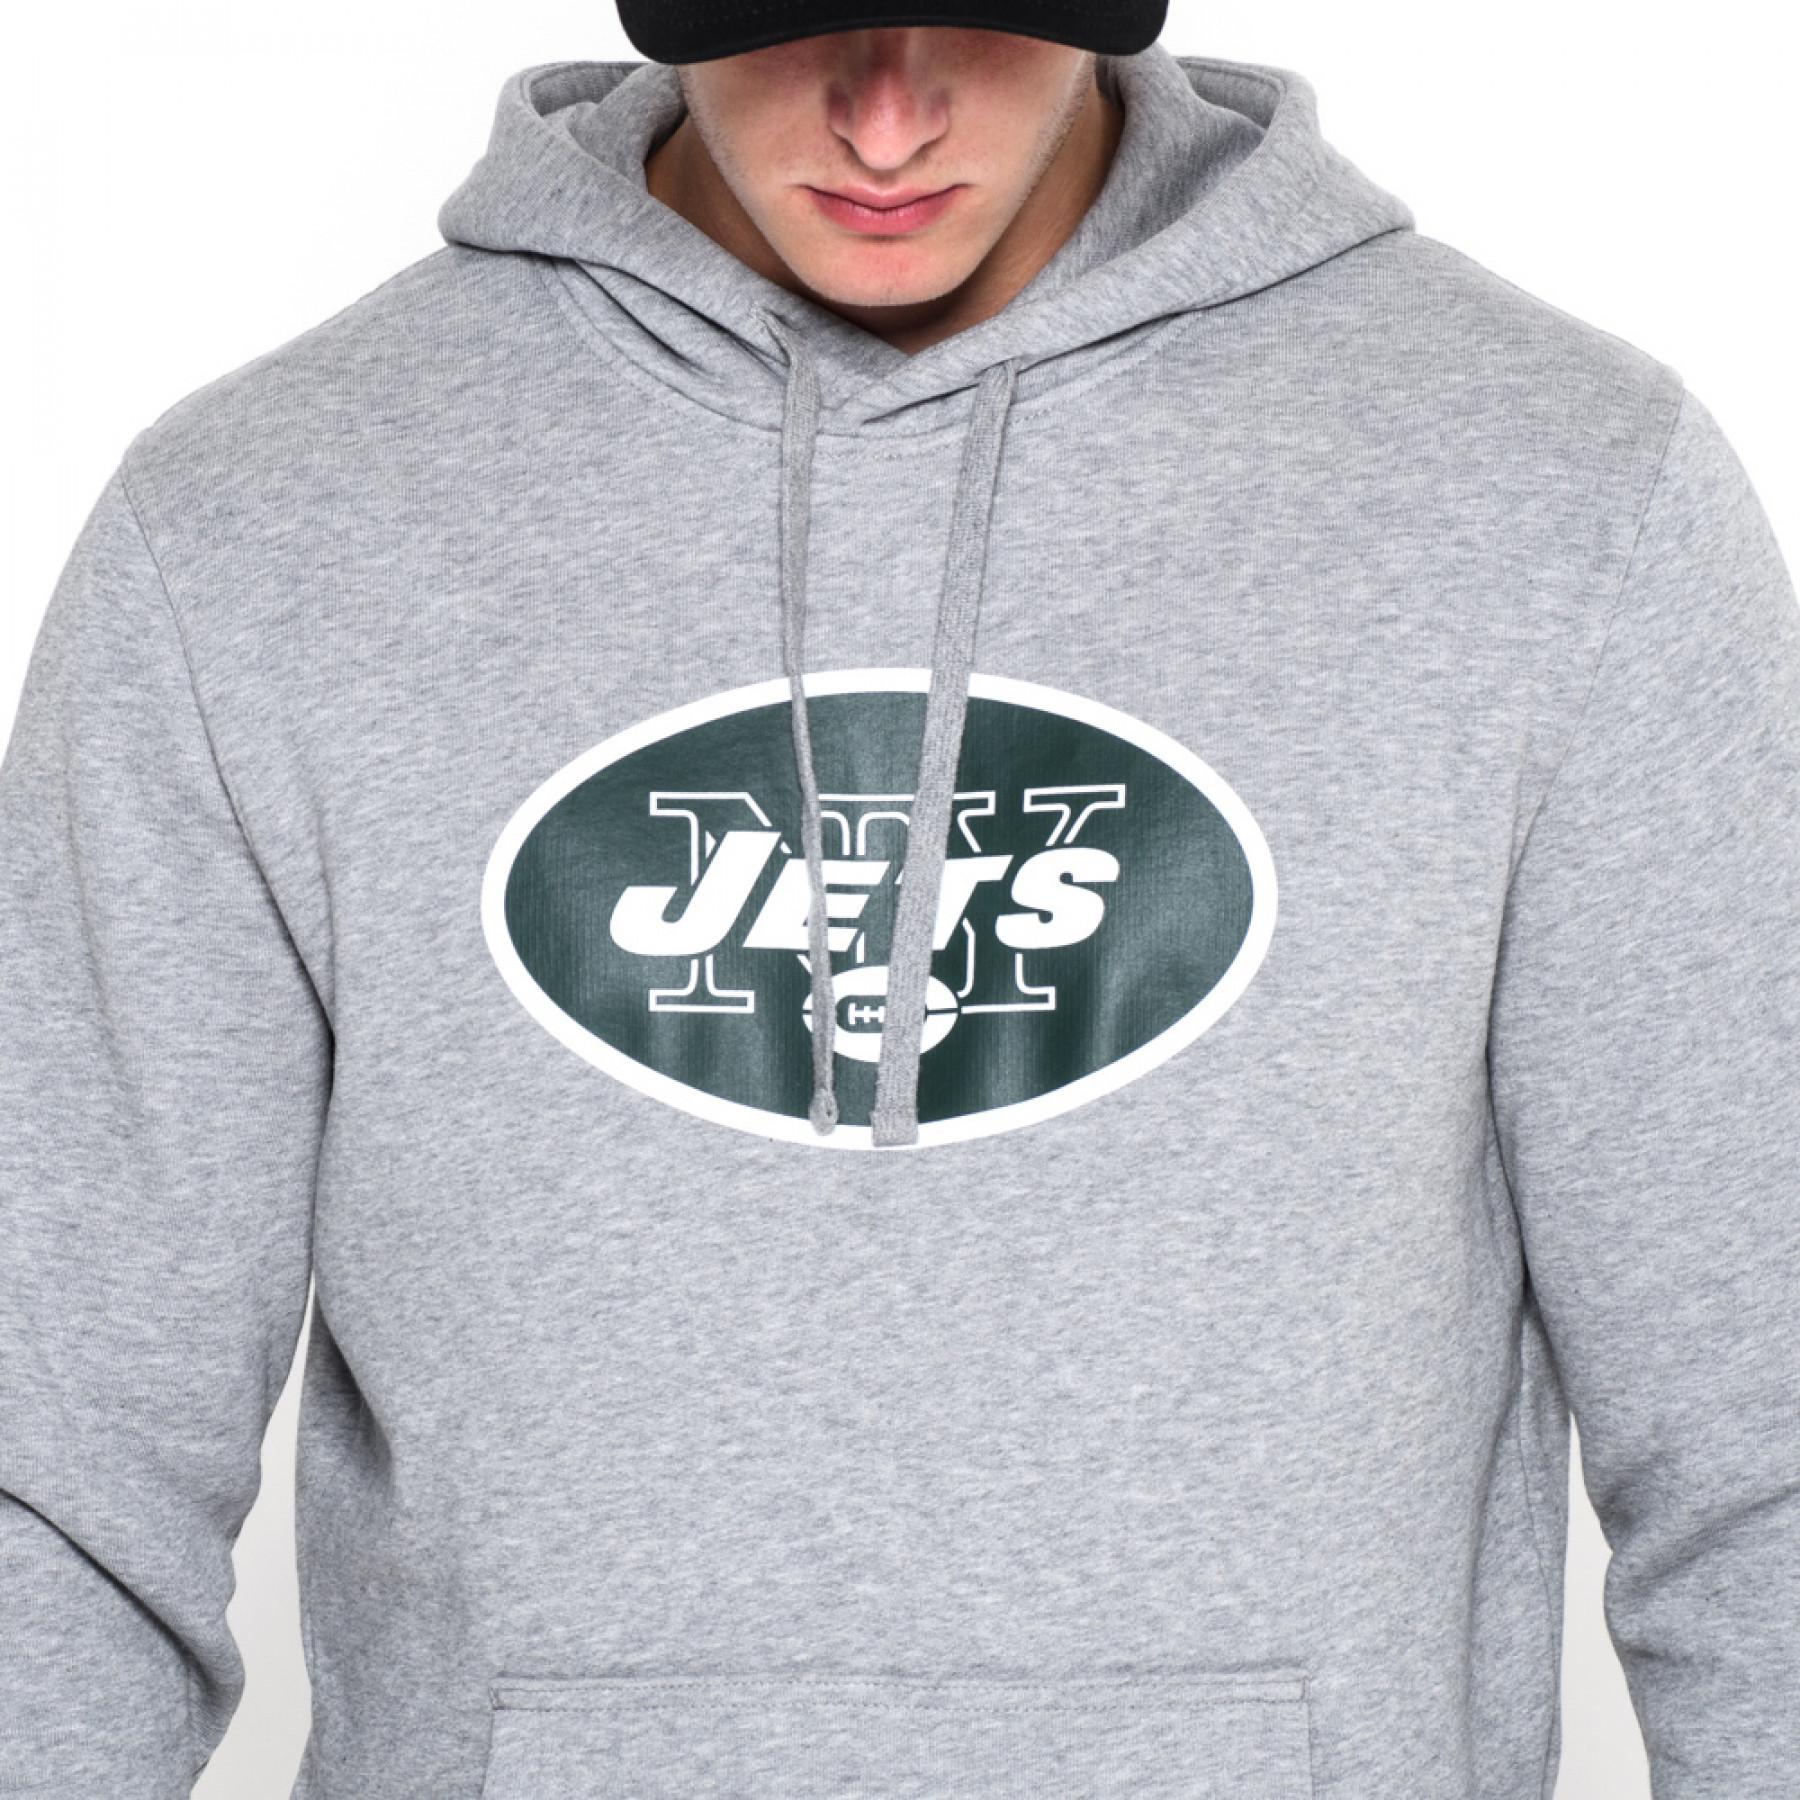 Huvtröjor New Era avec logo de l'équipe New York Jets